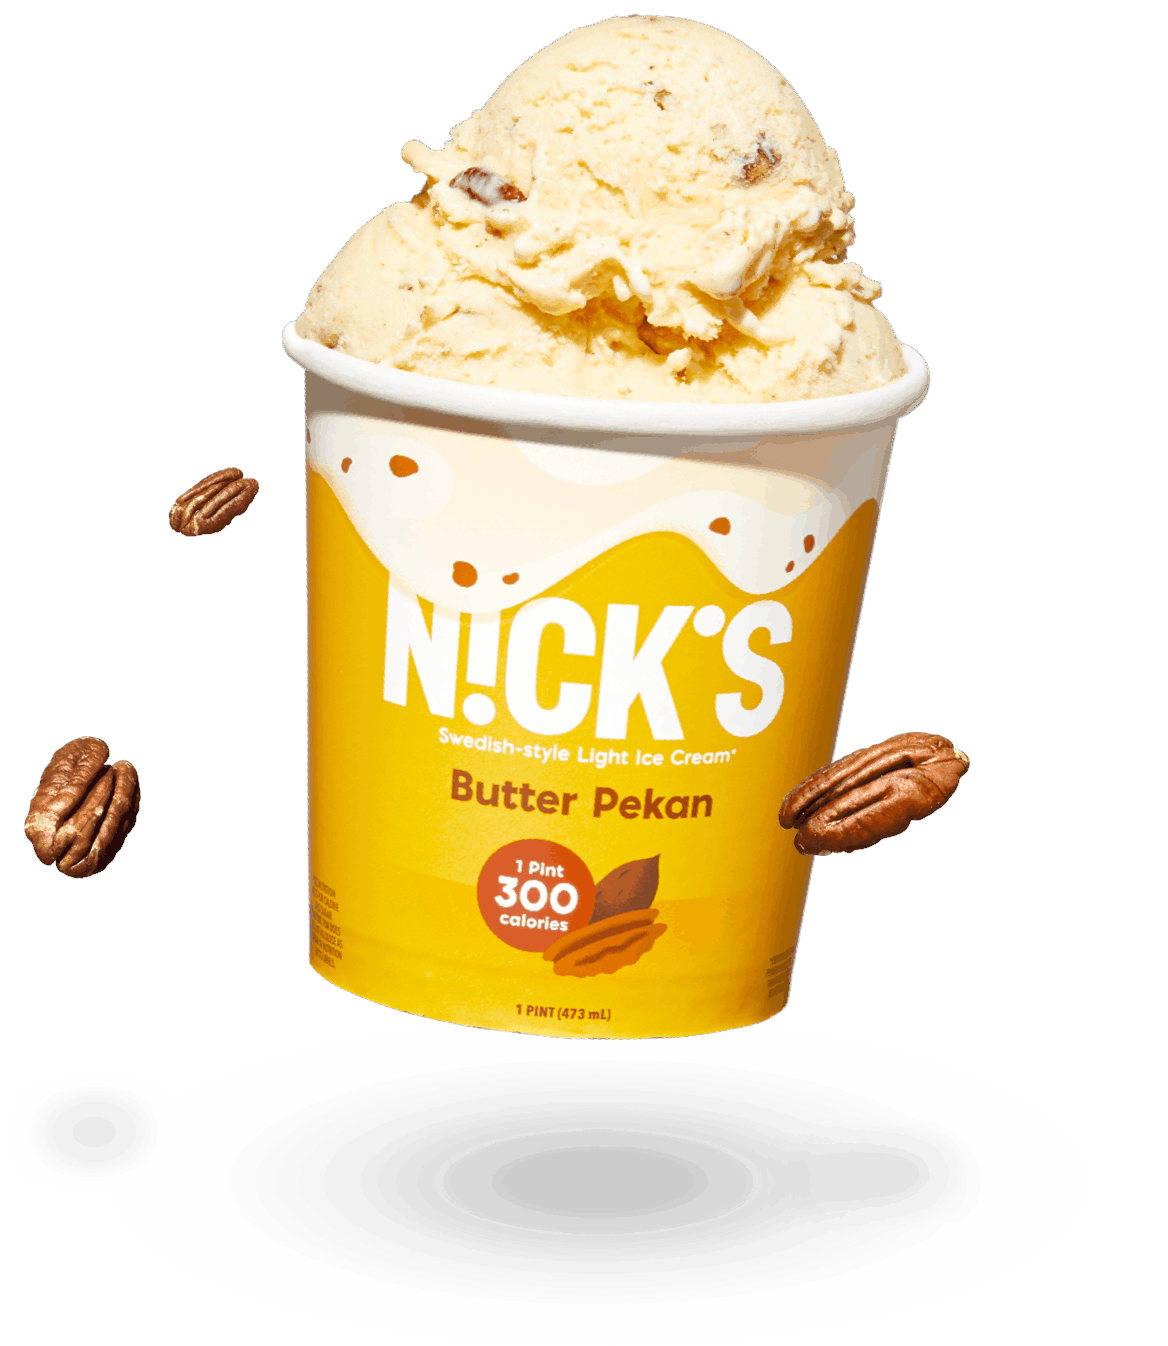 Nicks ice cream